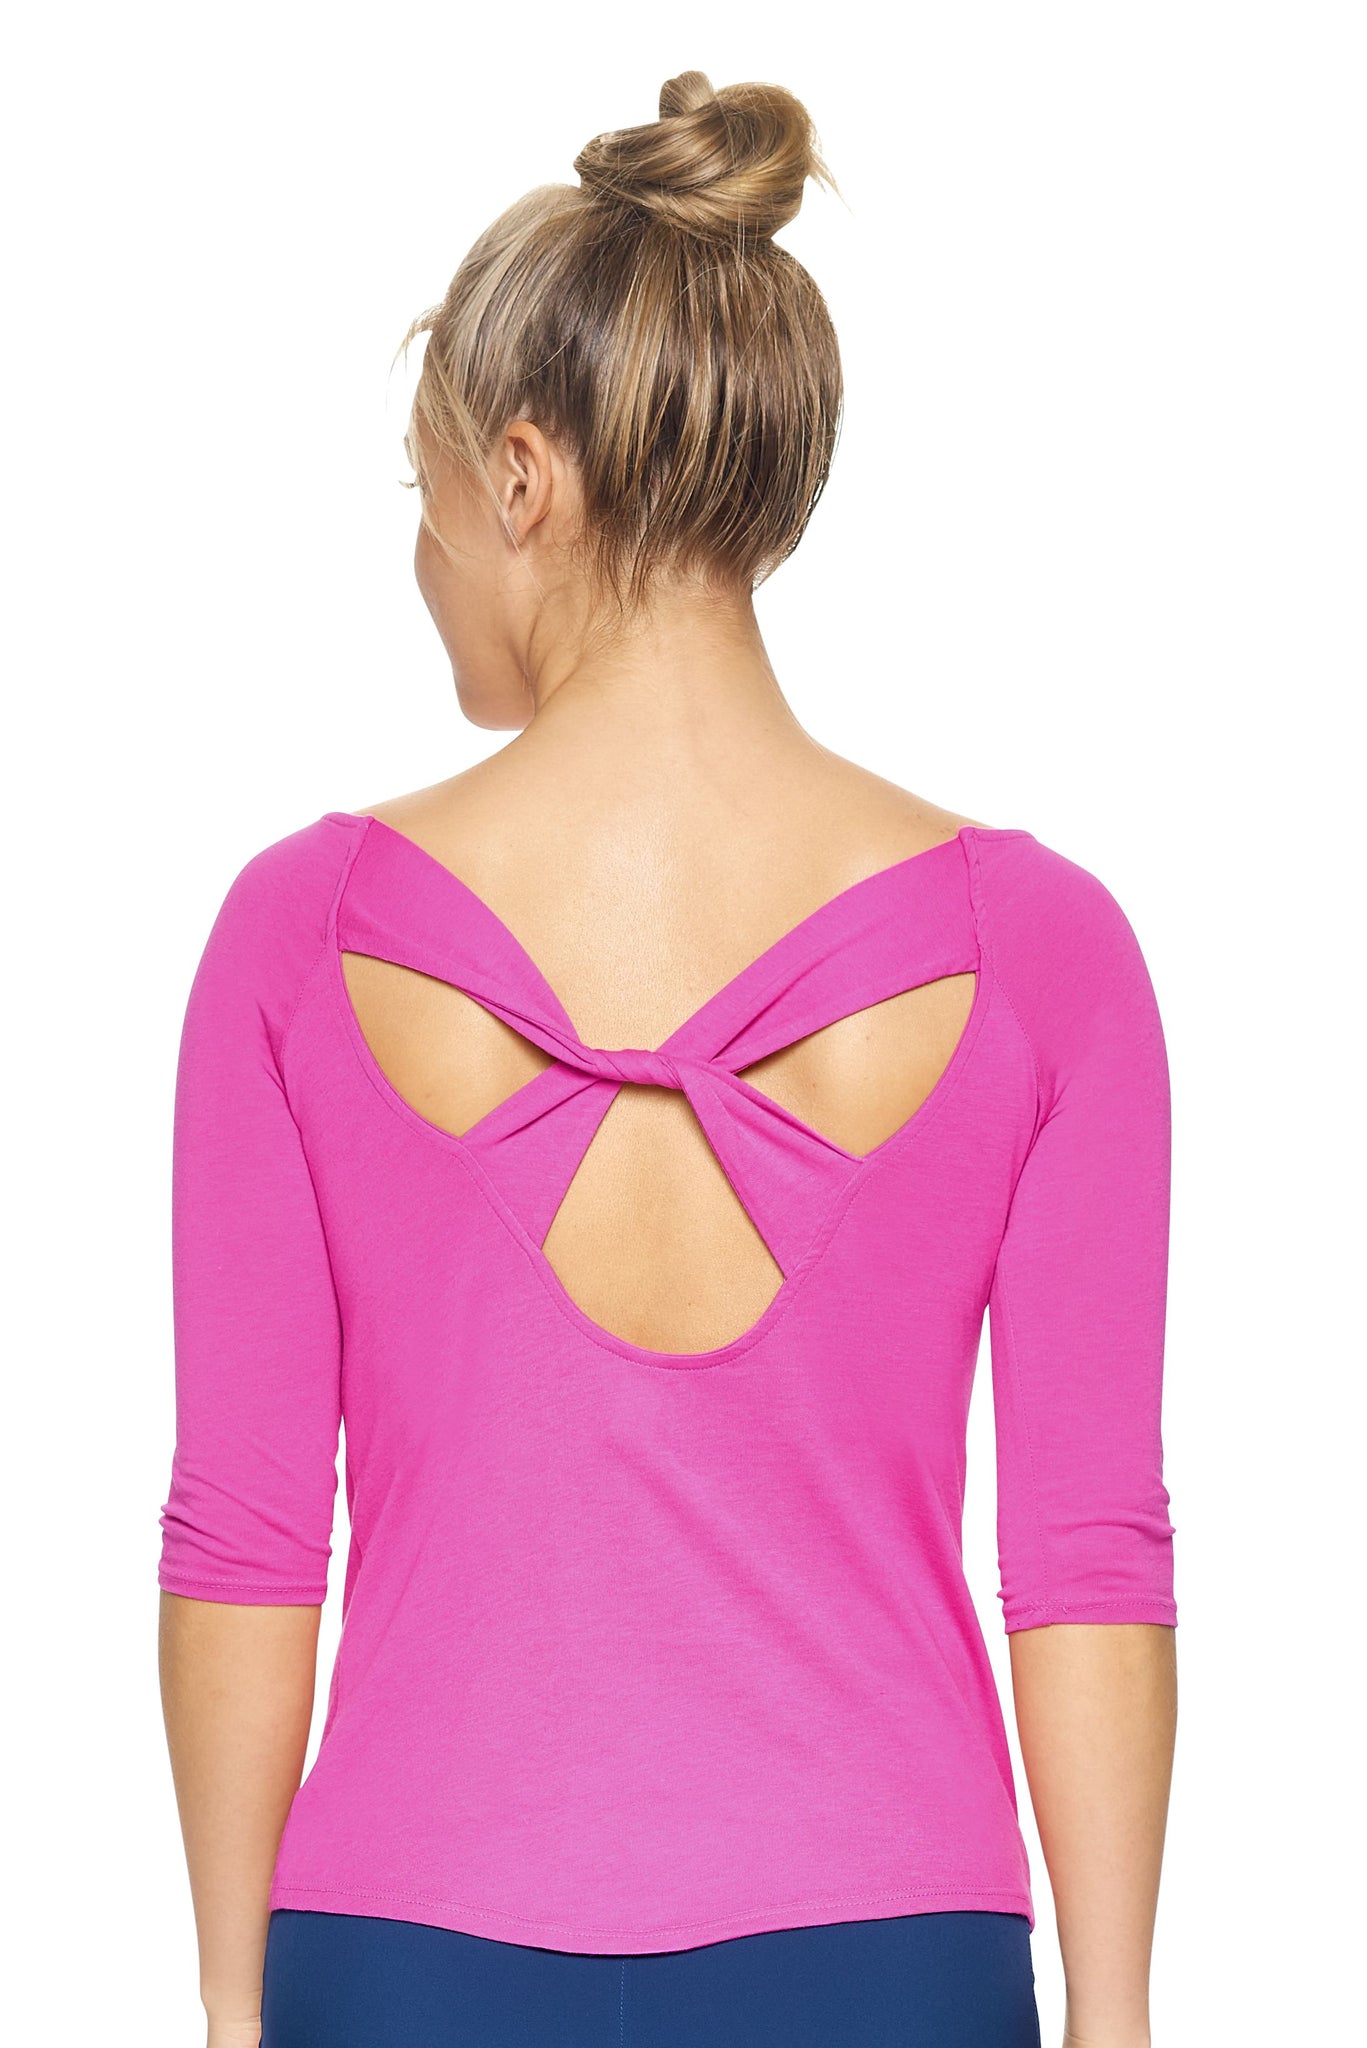 Expert Brand Wholesale Women's MoCA™ 3/4 Sleeve Cross Back Tee in Berry Pink Image 3#berry